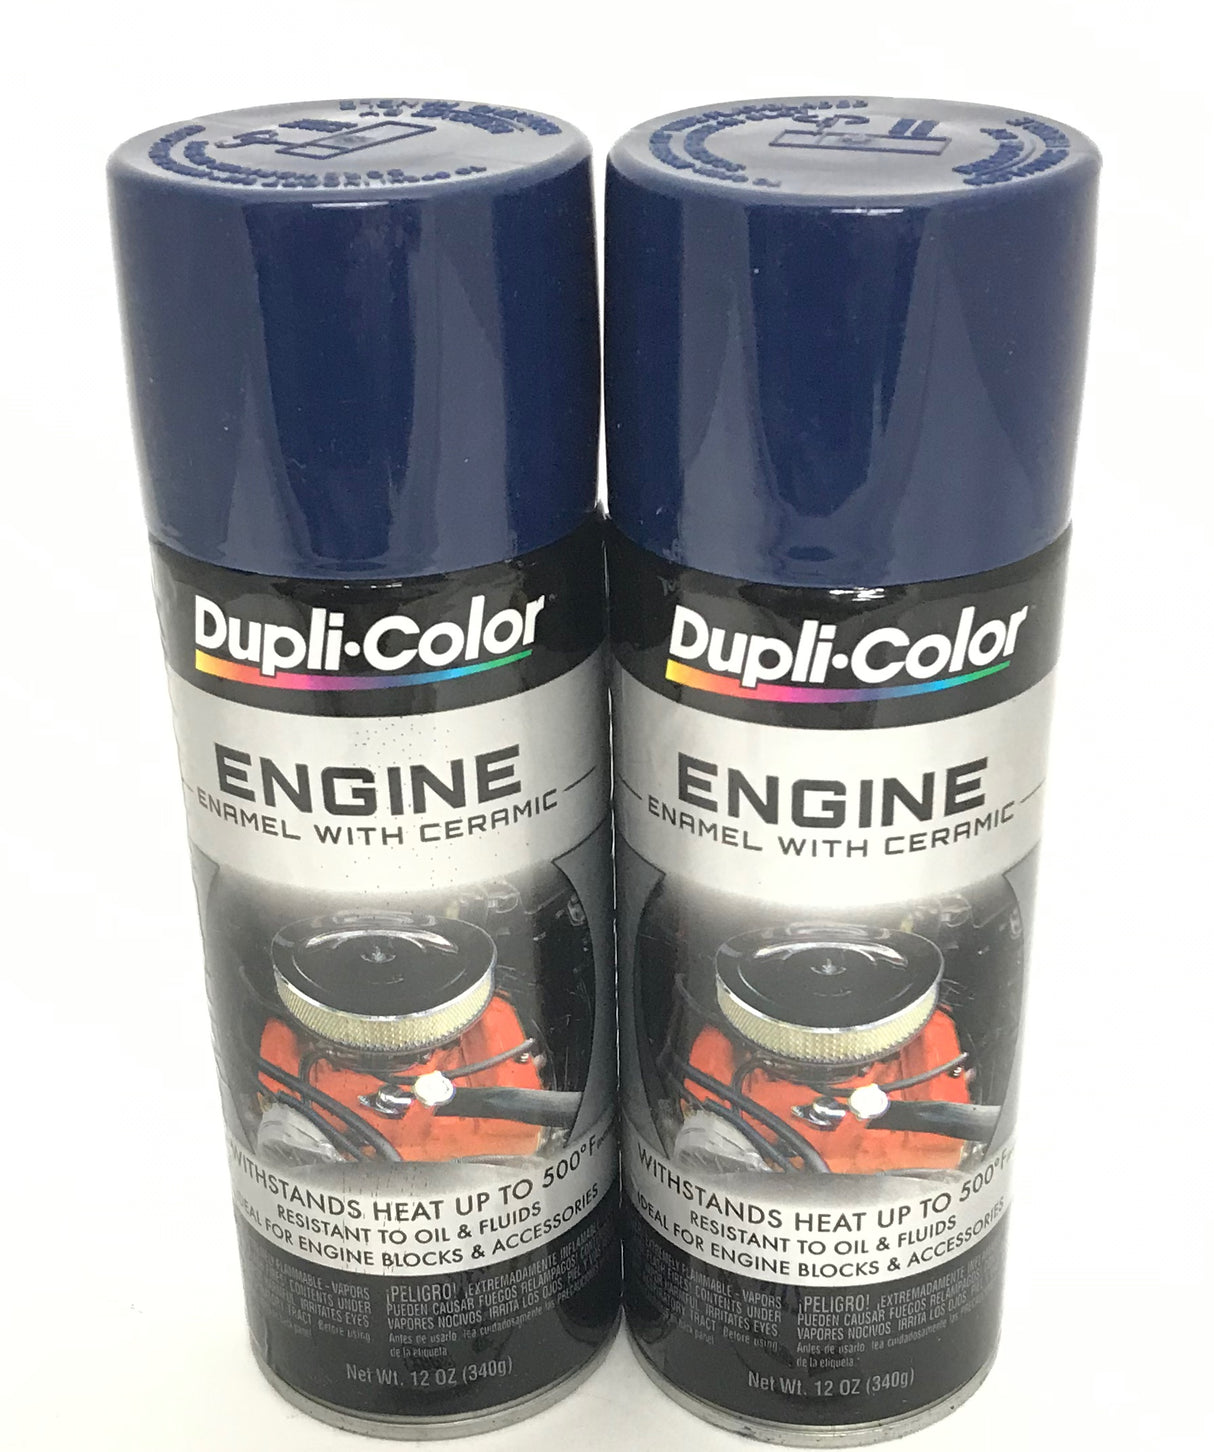 Duplicolor DE1606 - 2 Pack Engine Enamel Paint with Ceramic Ford Dark Blue - 12 oz